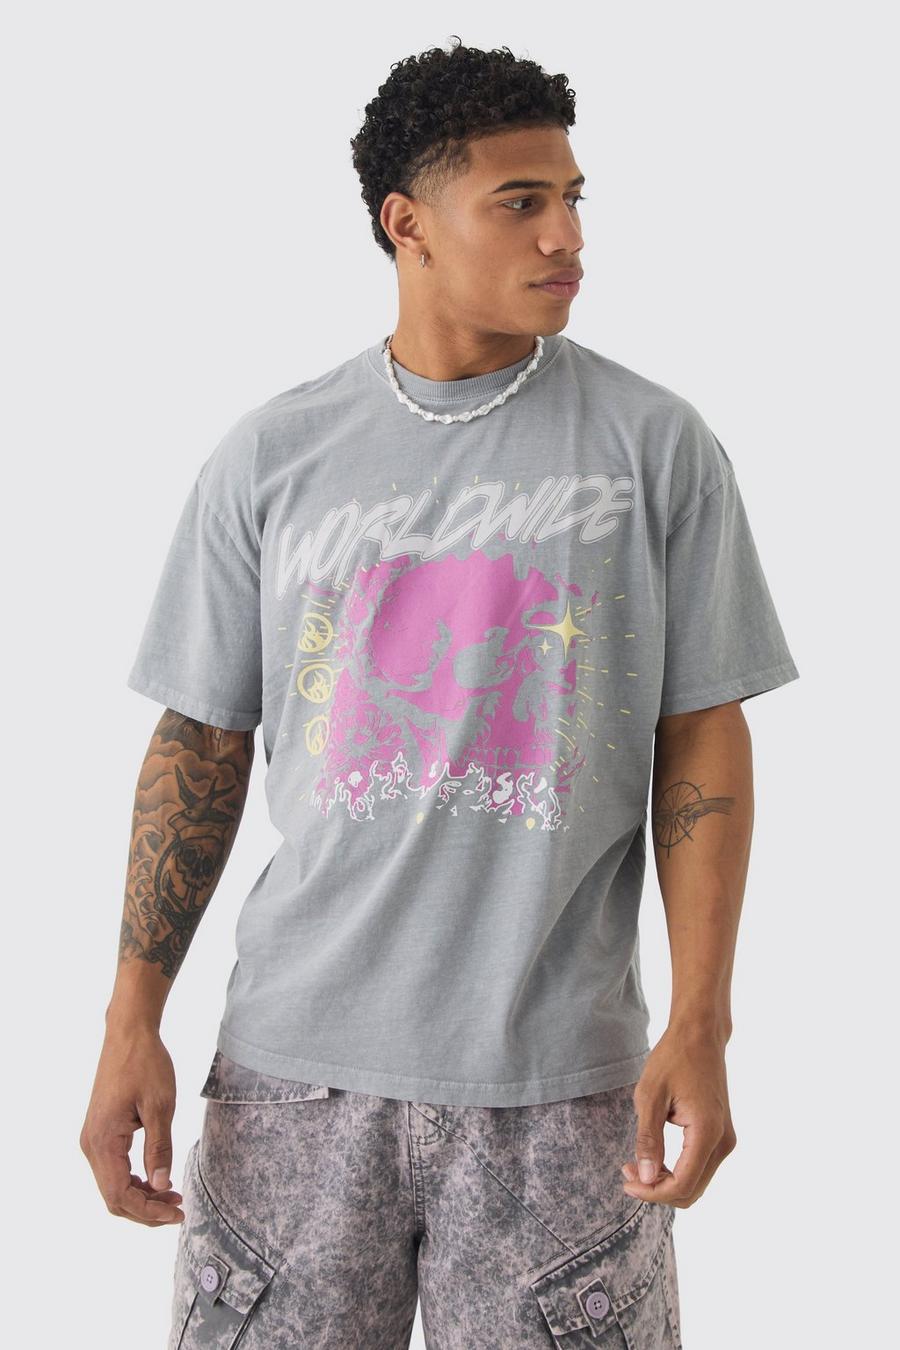 Camiseta oversize recta con estampado Worldwide de calavera desteñida, Grey image number 1